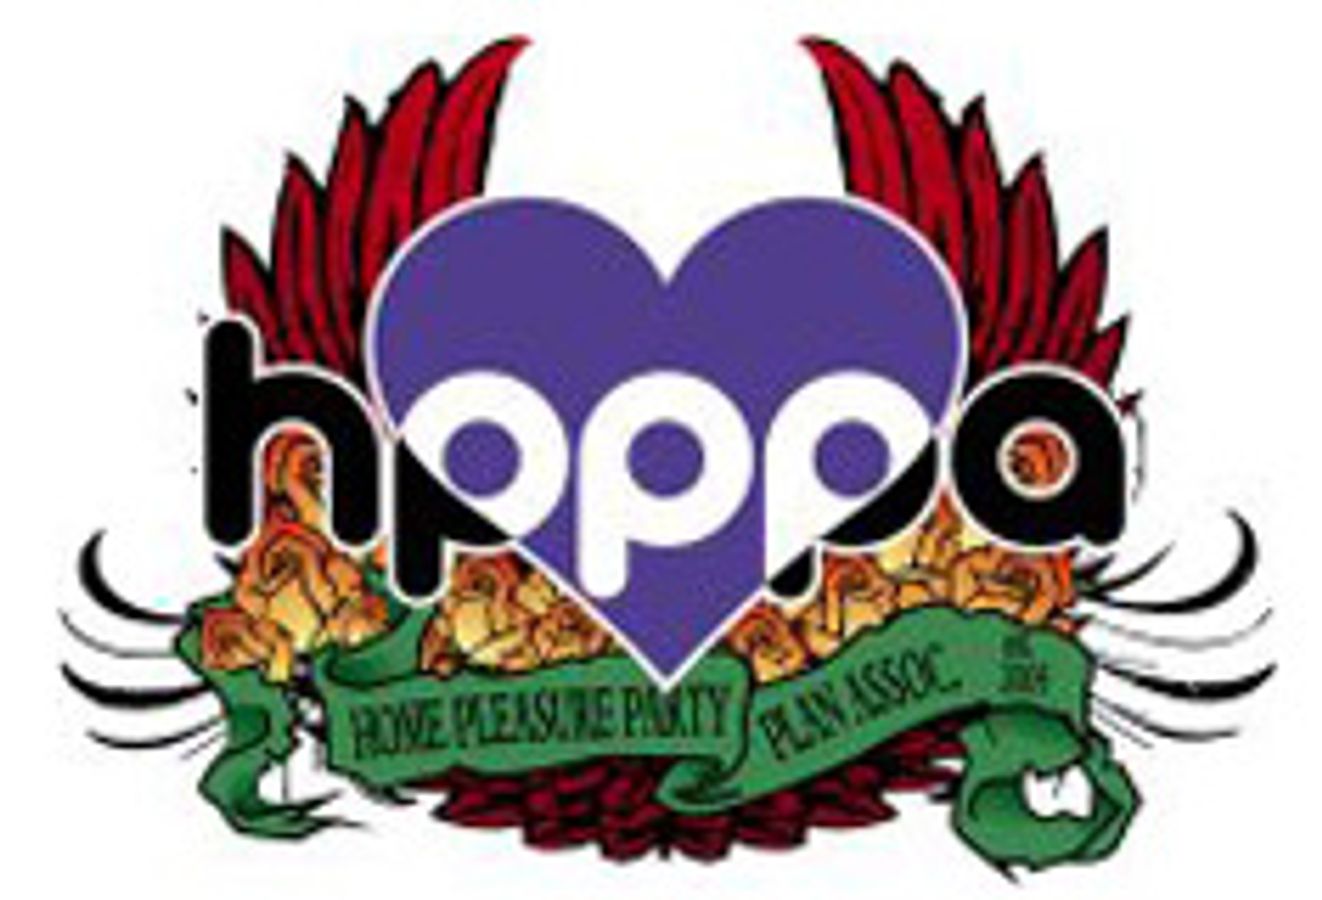 HPPPA, Inc.